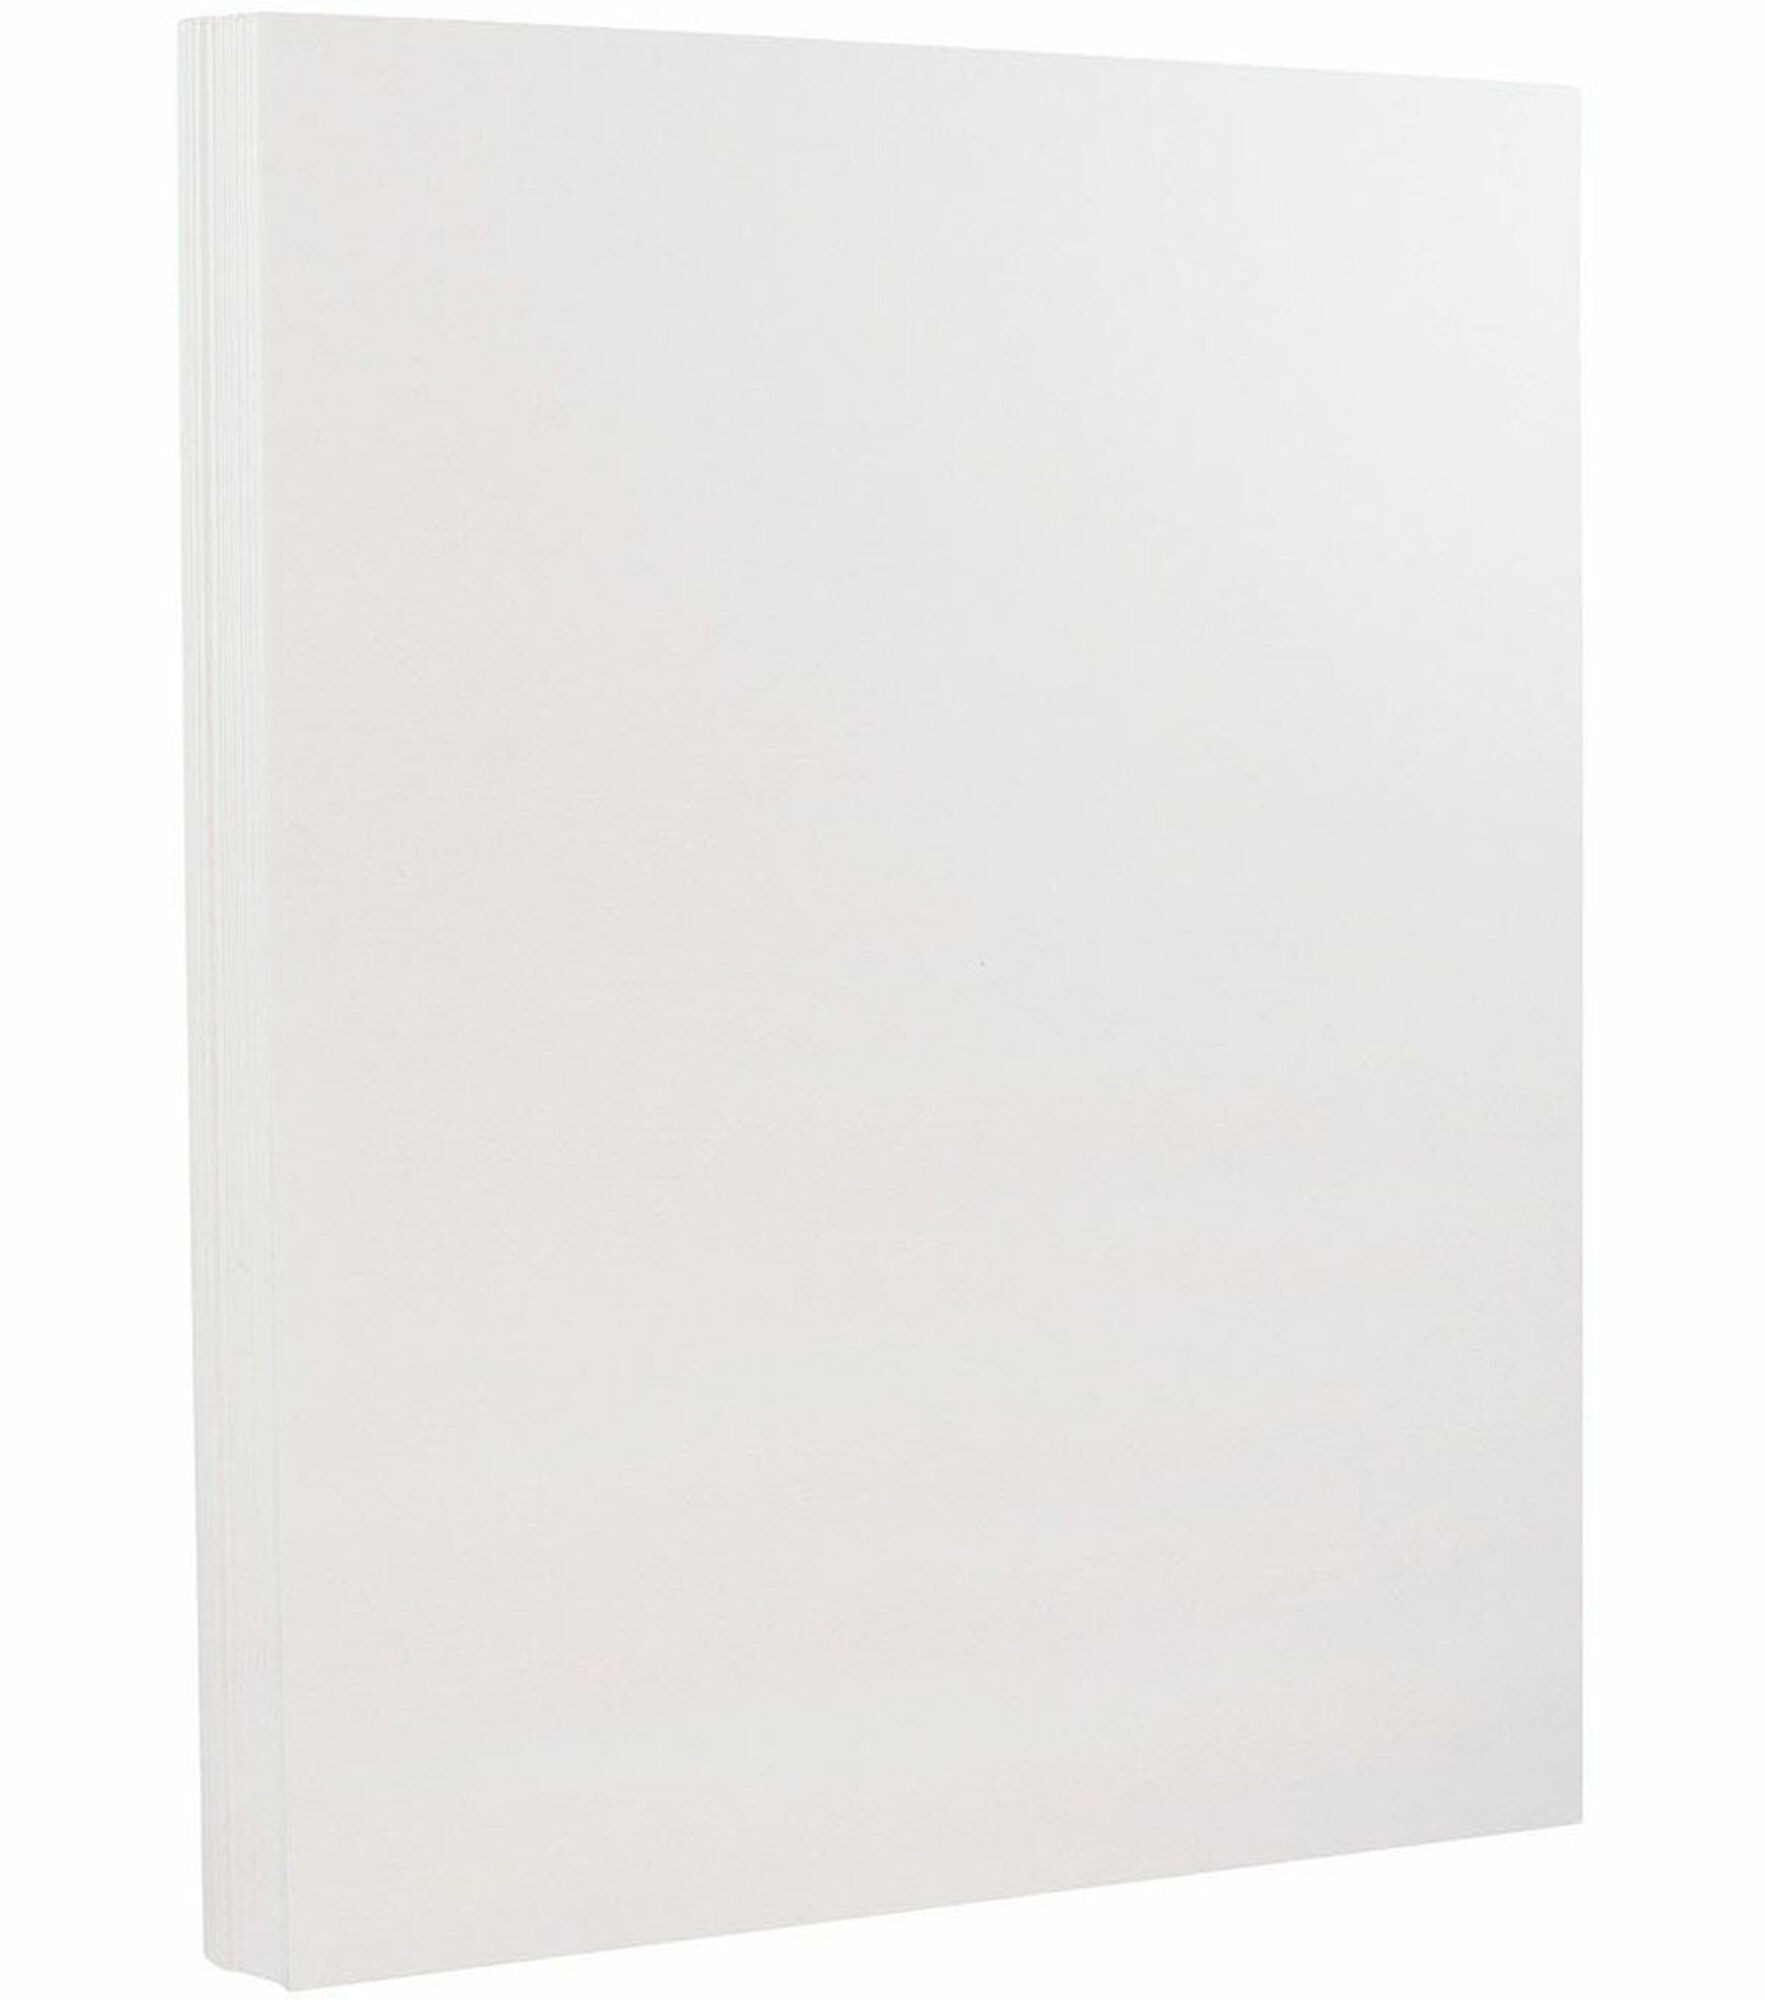 Basic WHITE (Standard) Card Stock Paper - 8.5 x 11 - 80lb Cover